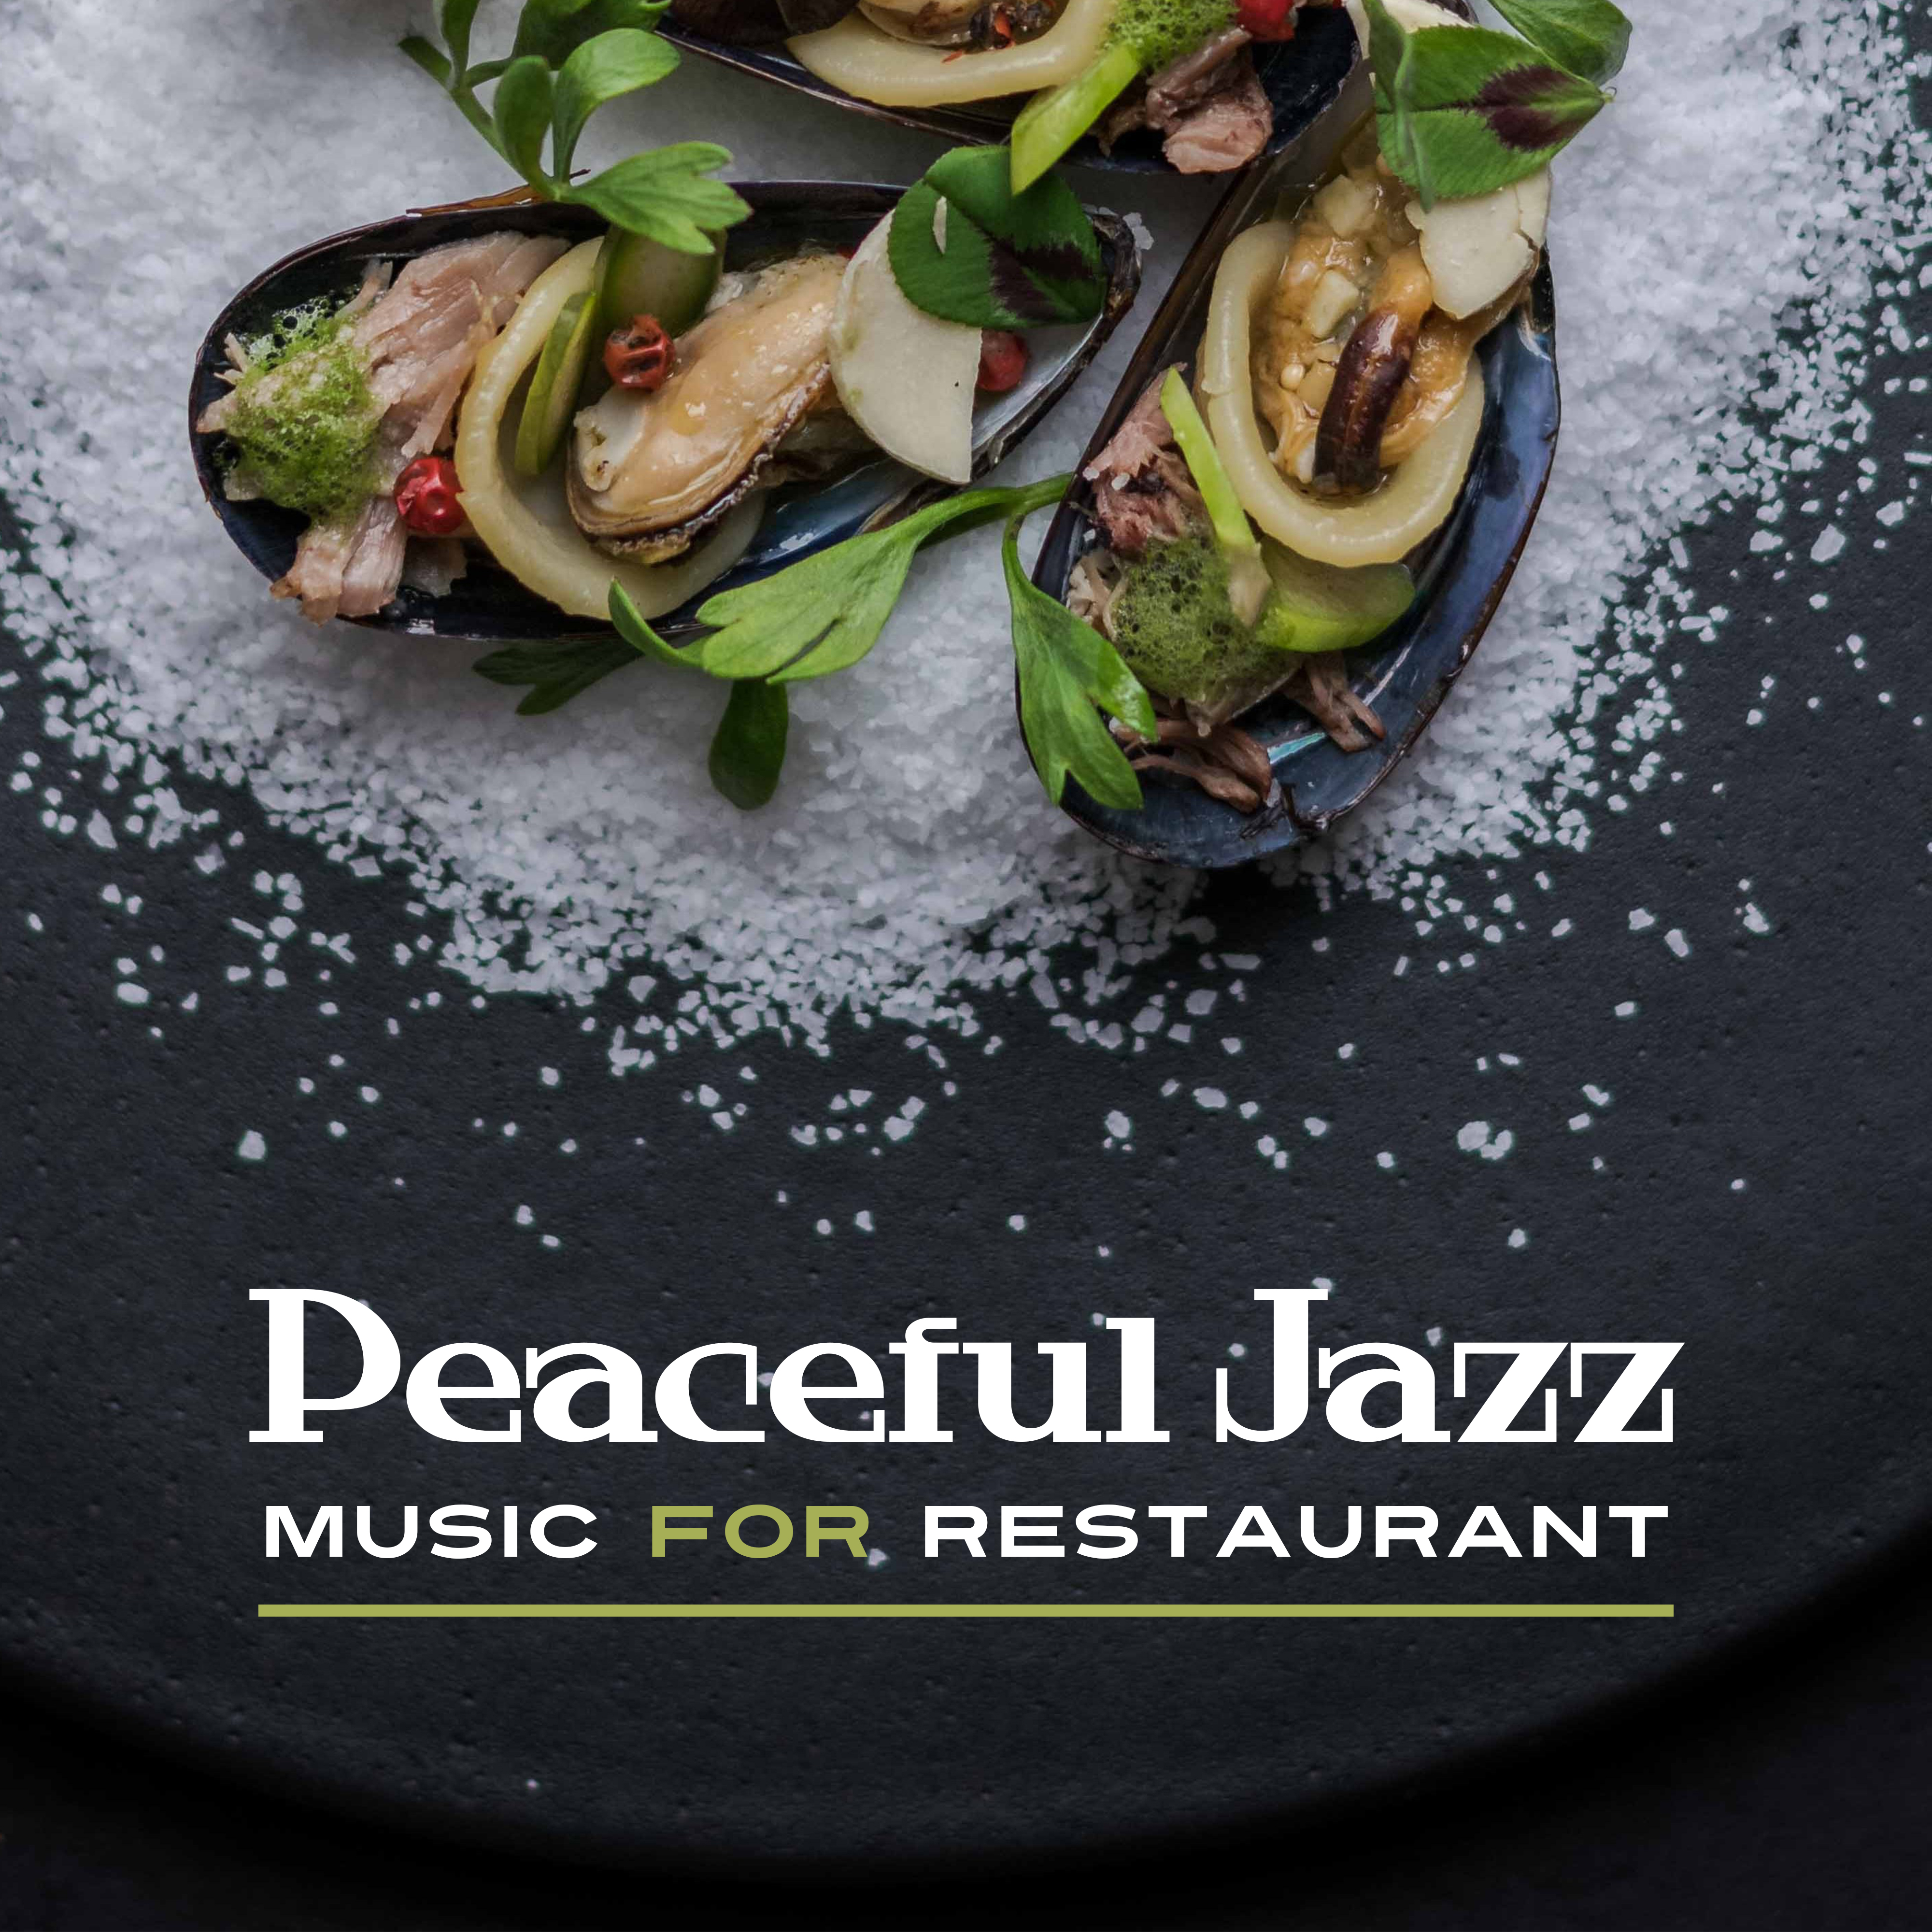 Peaceful Jazz Music for Restaurant